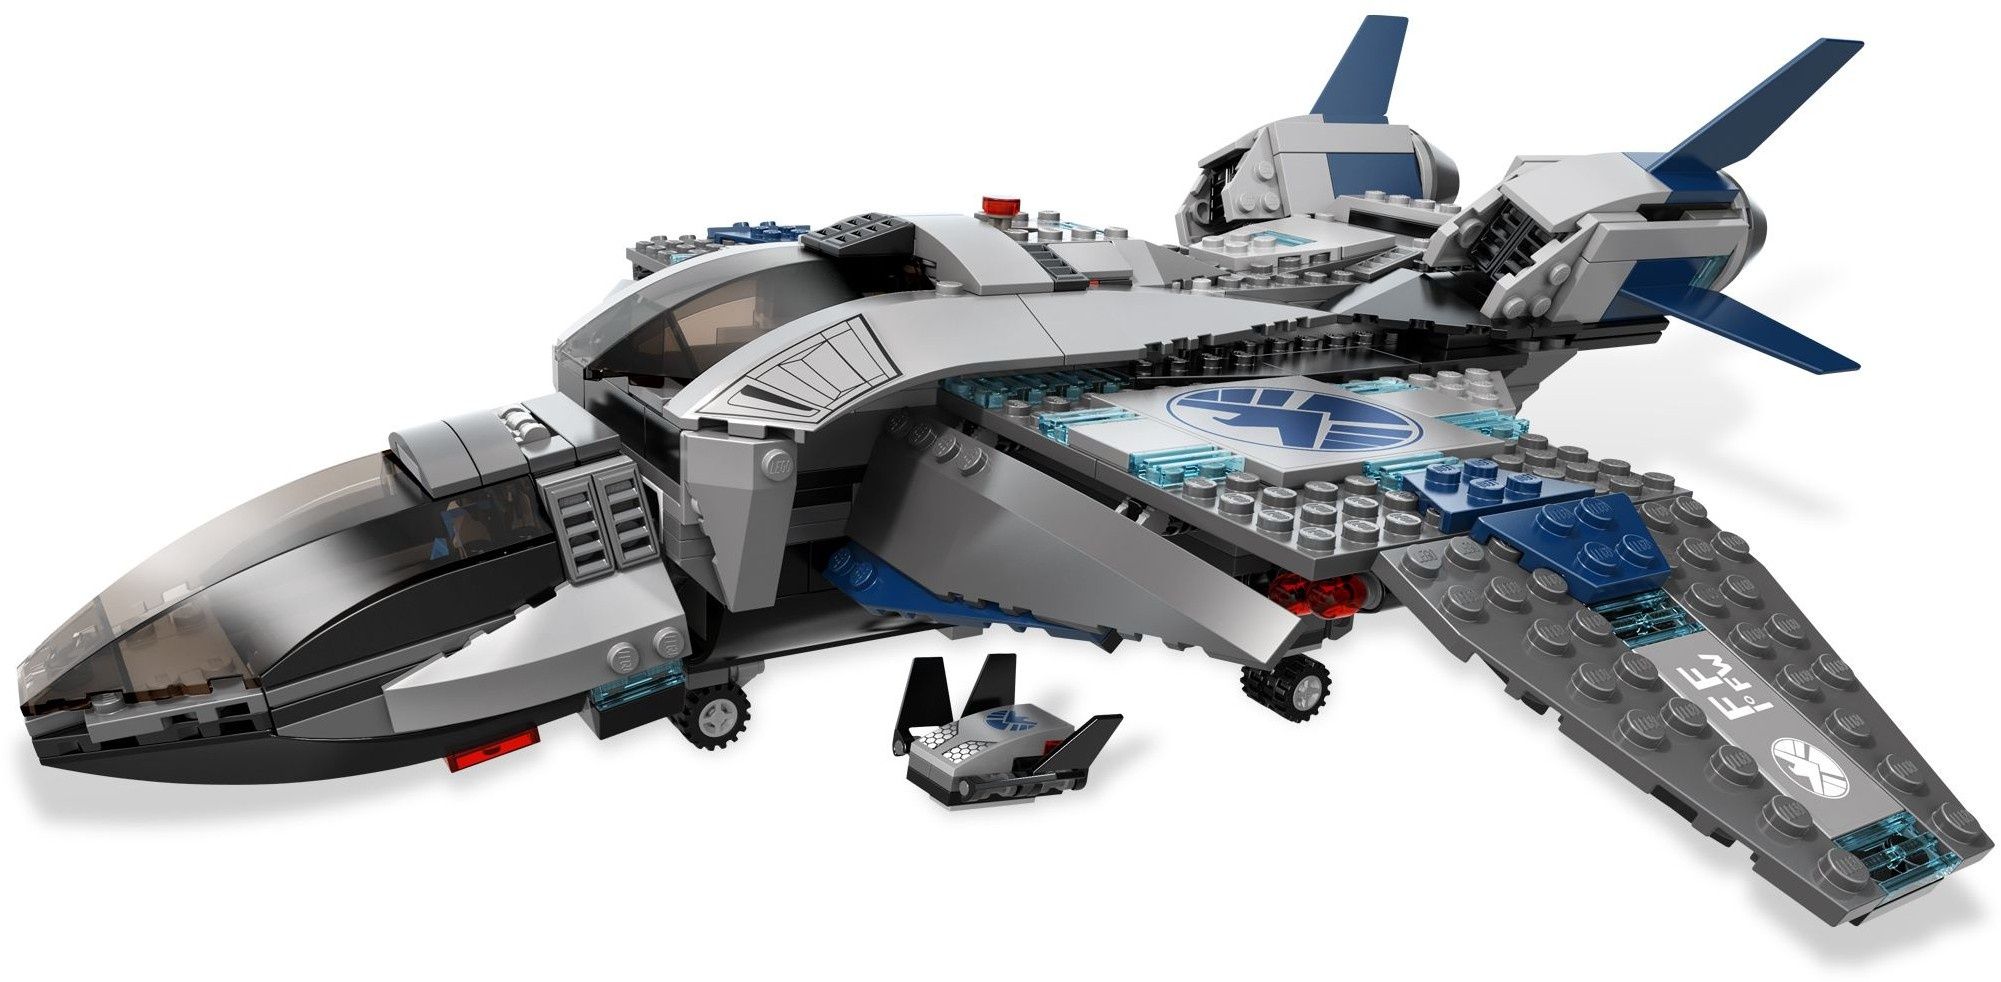 Lego Marvel Super Heroes |6869| Avengers Quinjet Aerial Battle